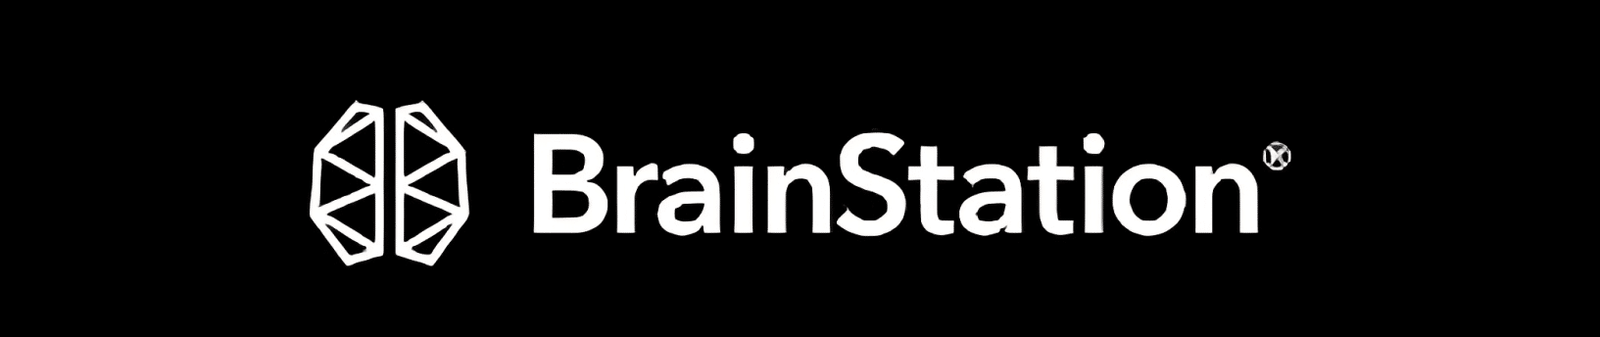 brain station logo